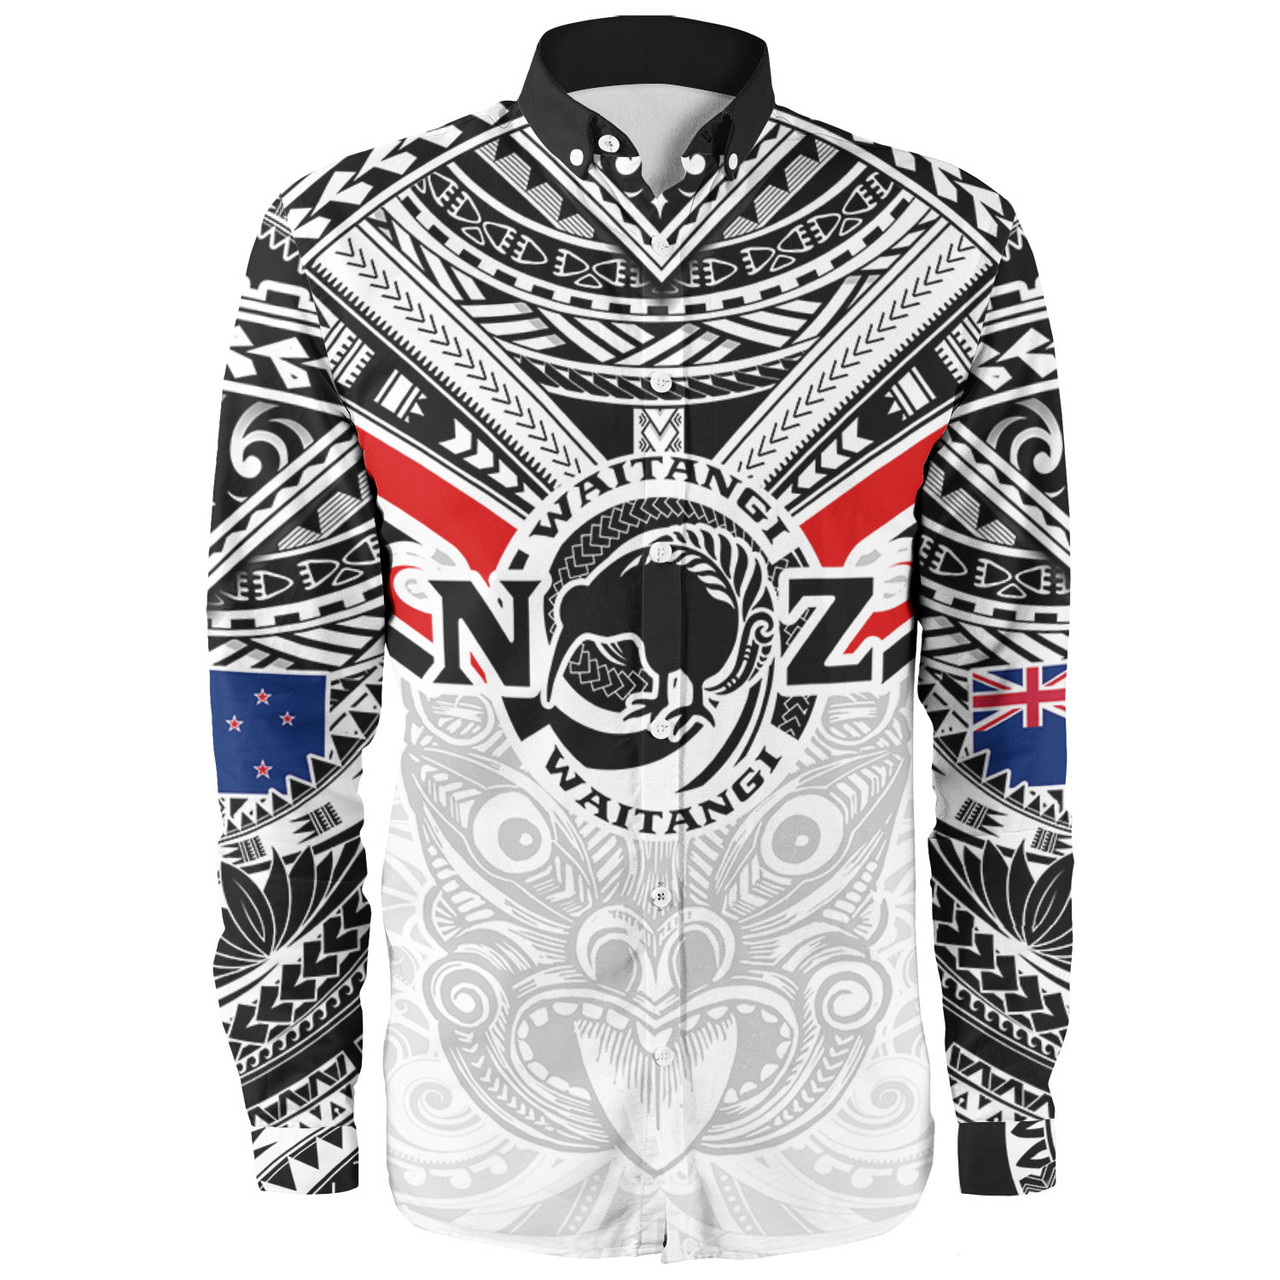 New Zealand Waitangi Day Long Sleeve Shirt - New Zealand Kiwi Fern With Maori Koru Spiral White